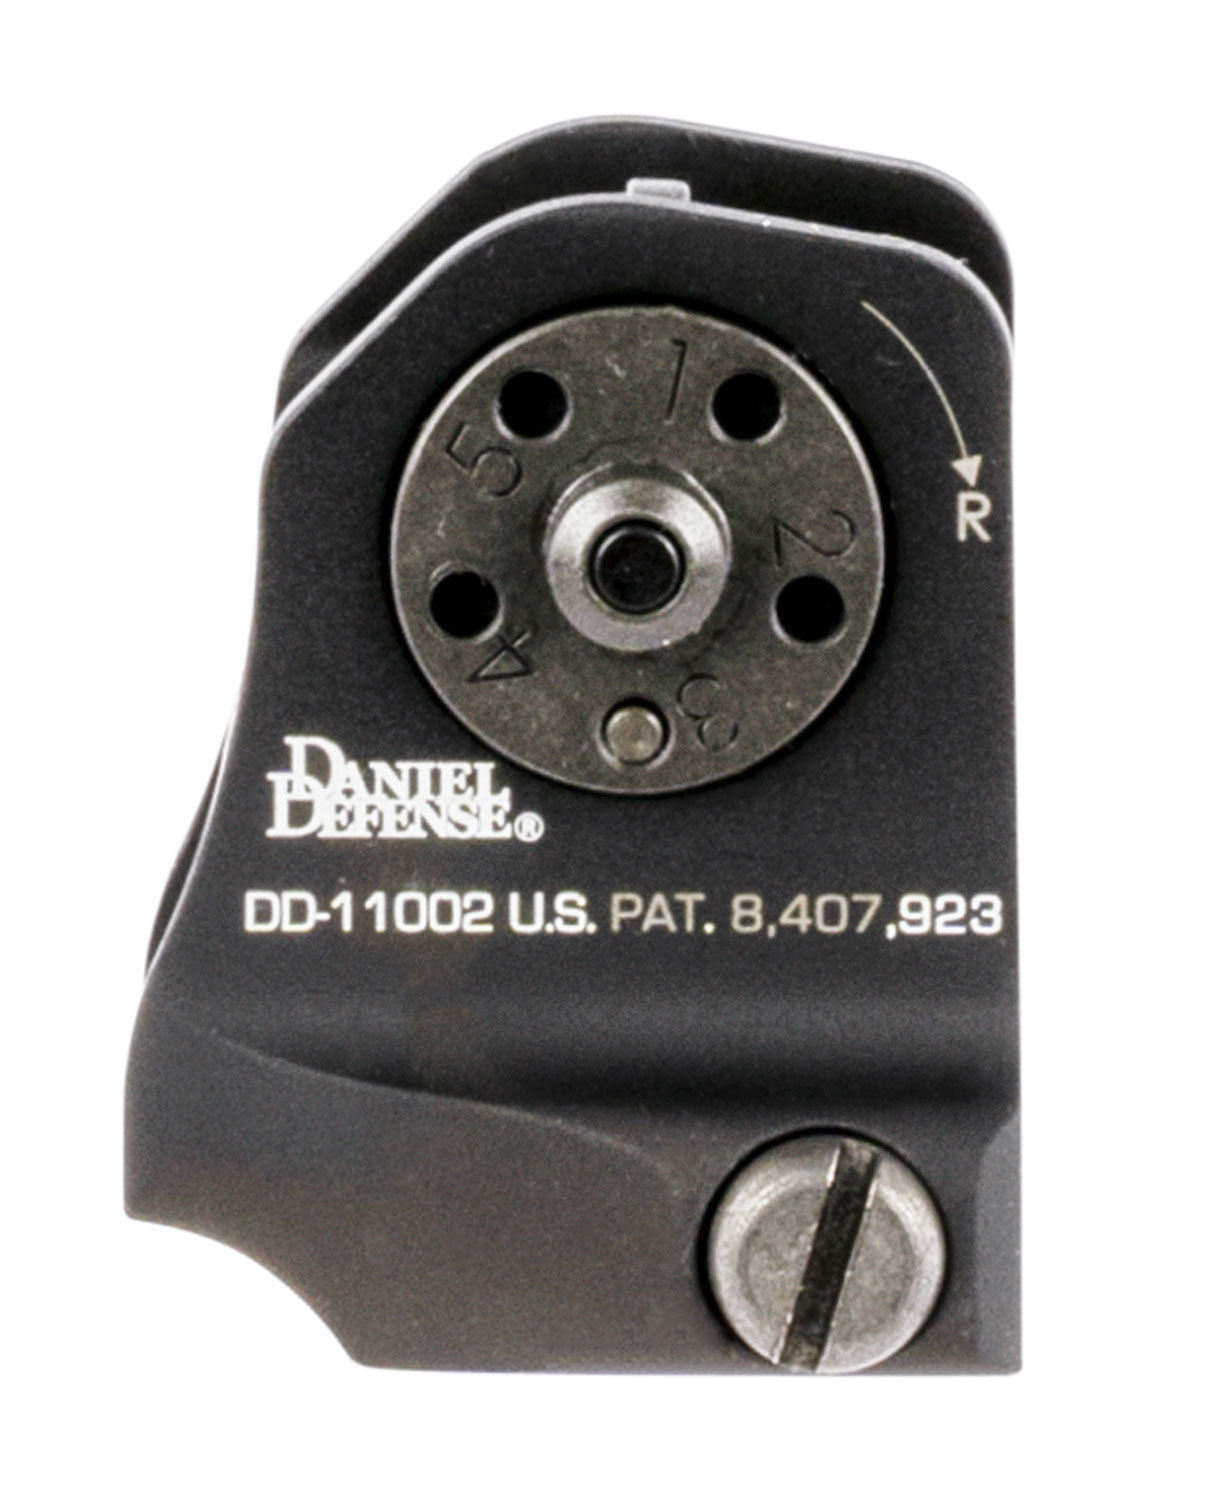 Daniel Defense 1906411002 Rock and Lock A1.5 Rear Sight Fixed Black Hardcoat Anodized for AR-15